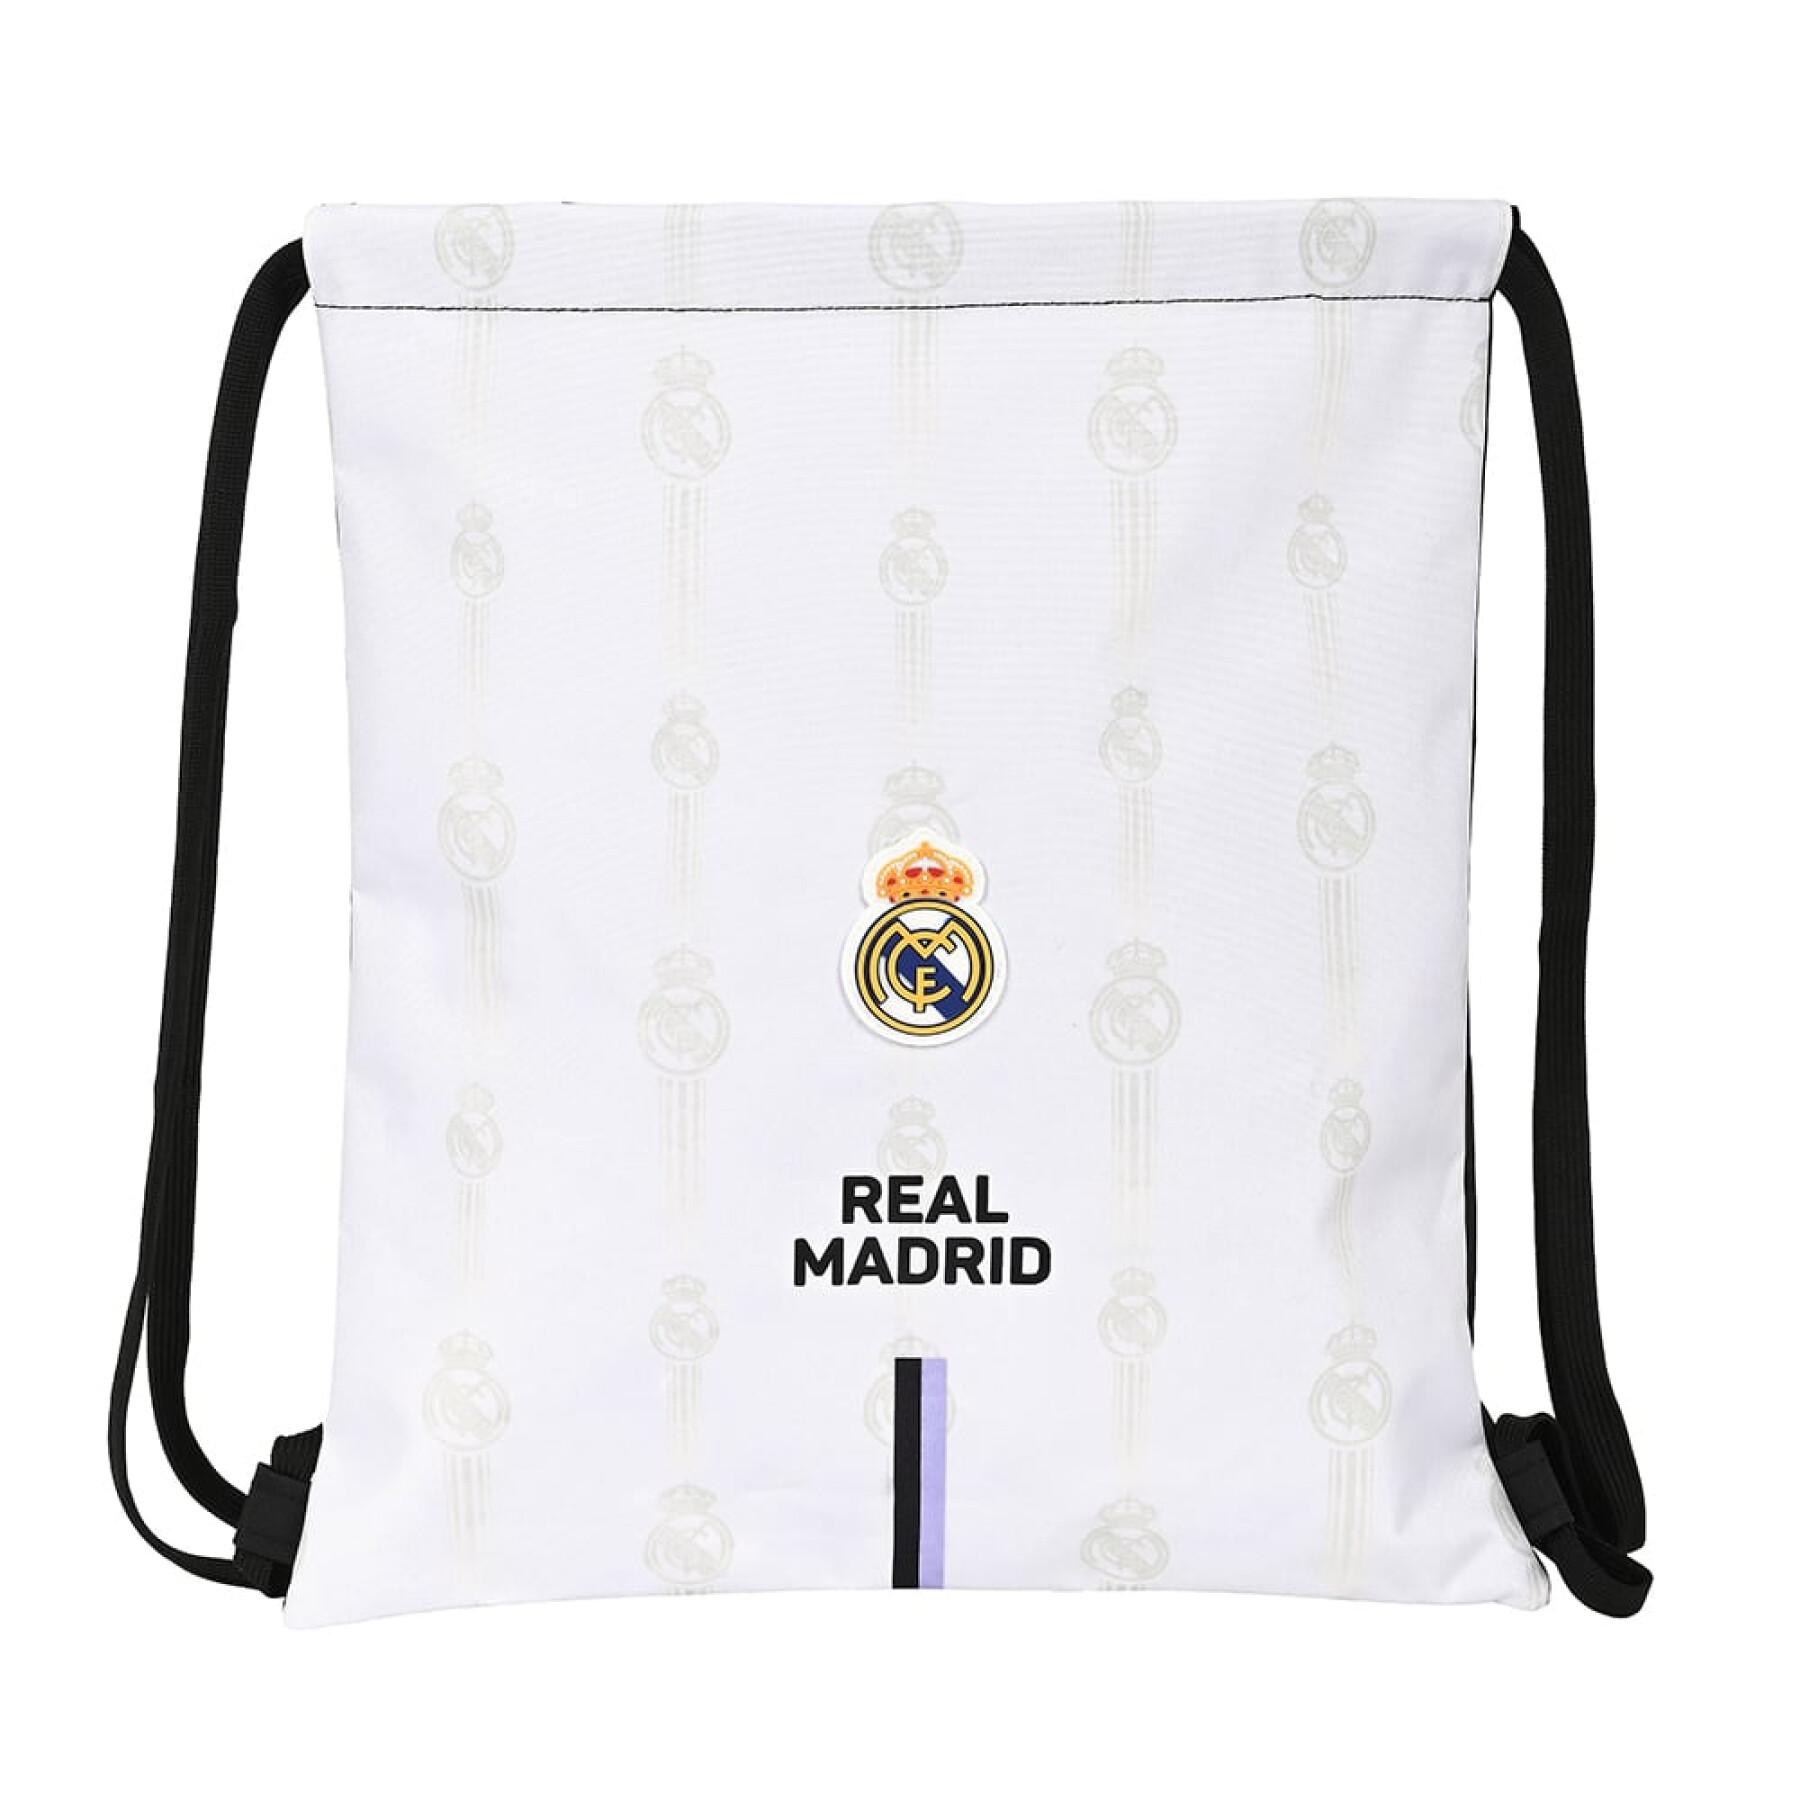 Children's sports bag Safta Real Madrid